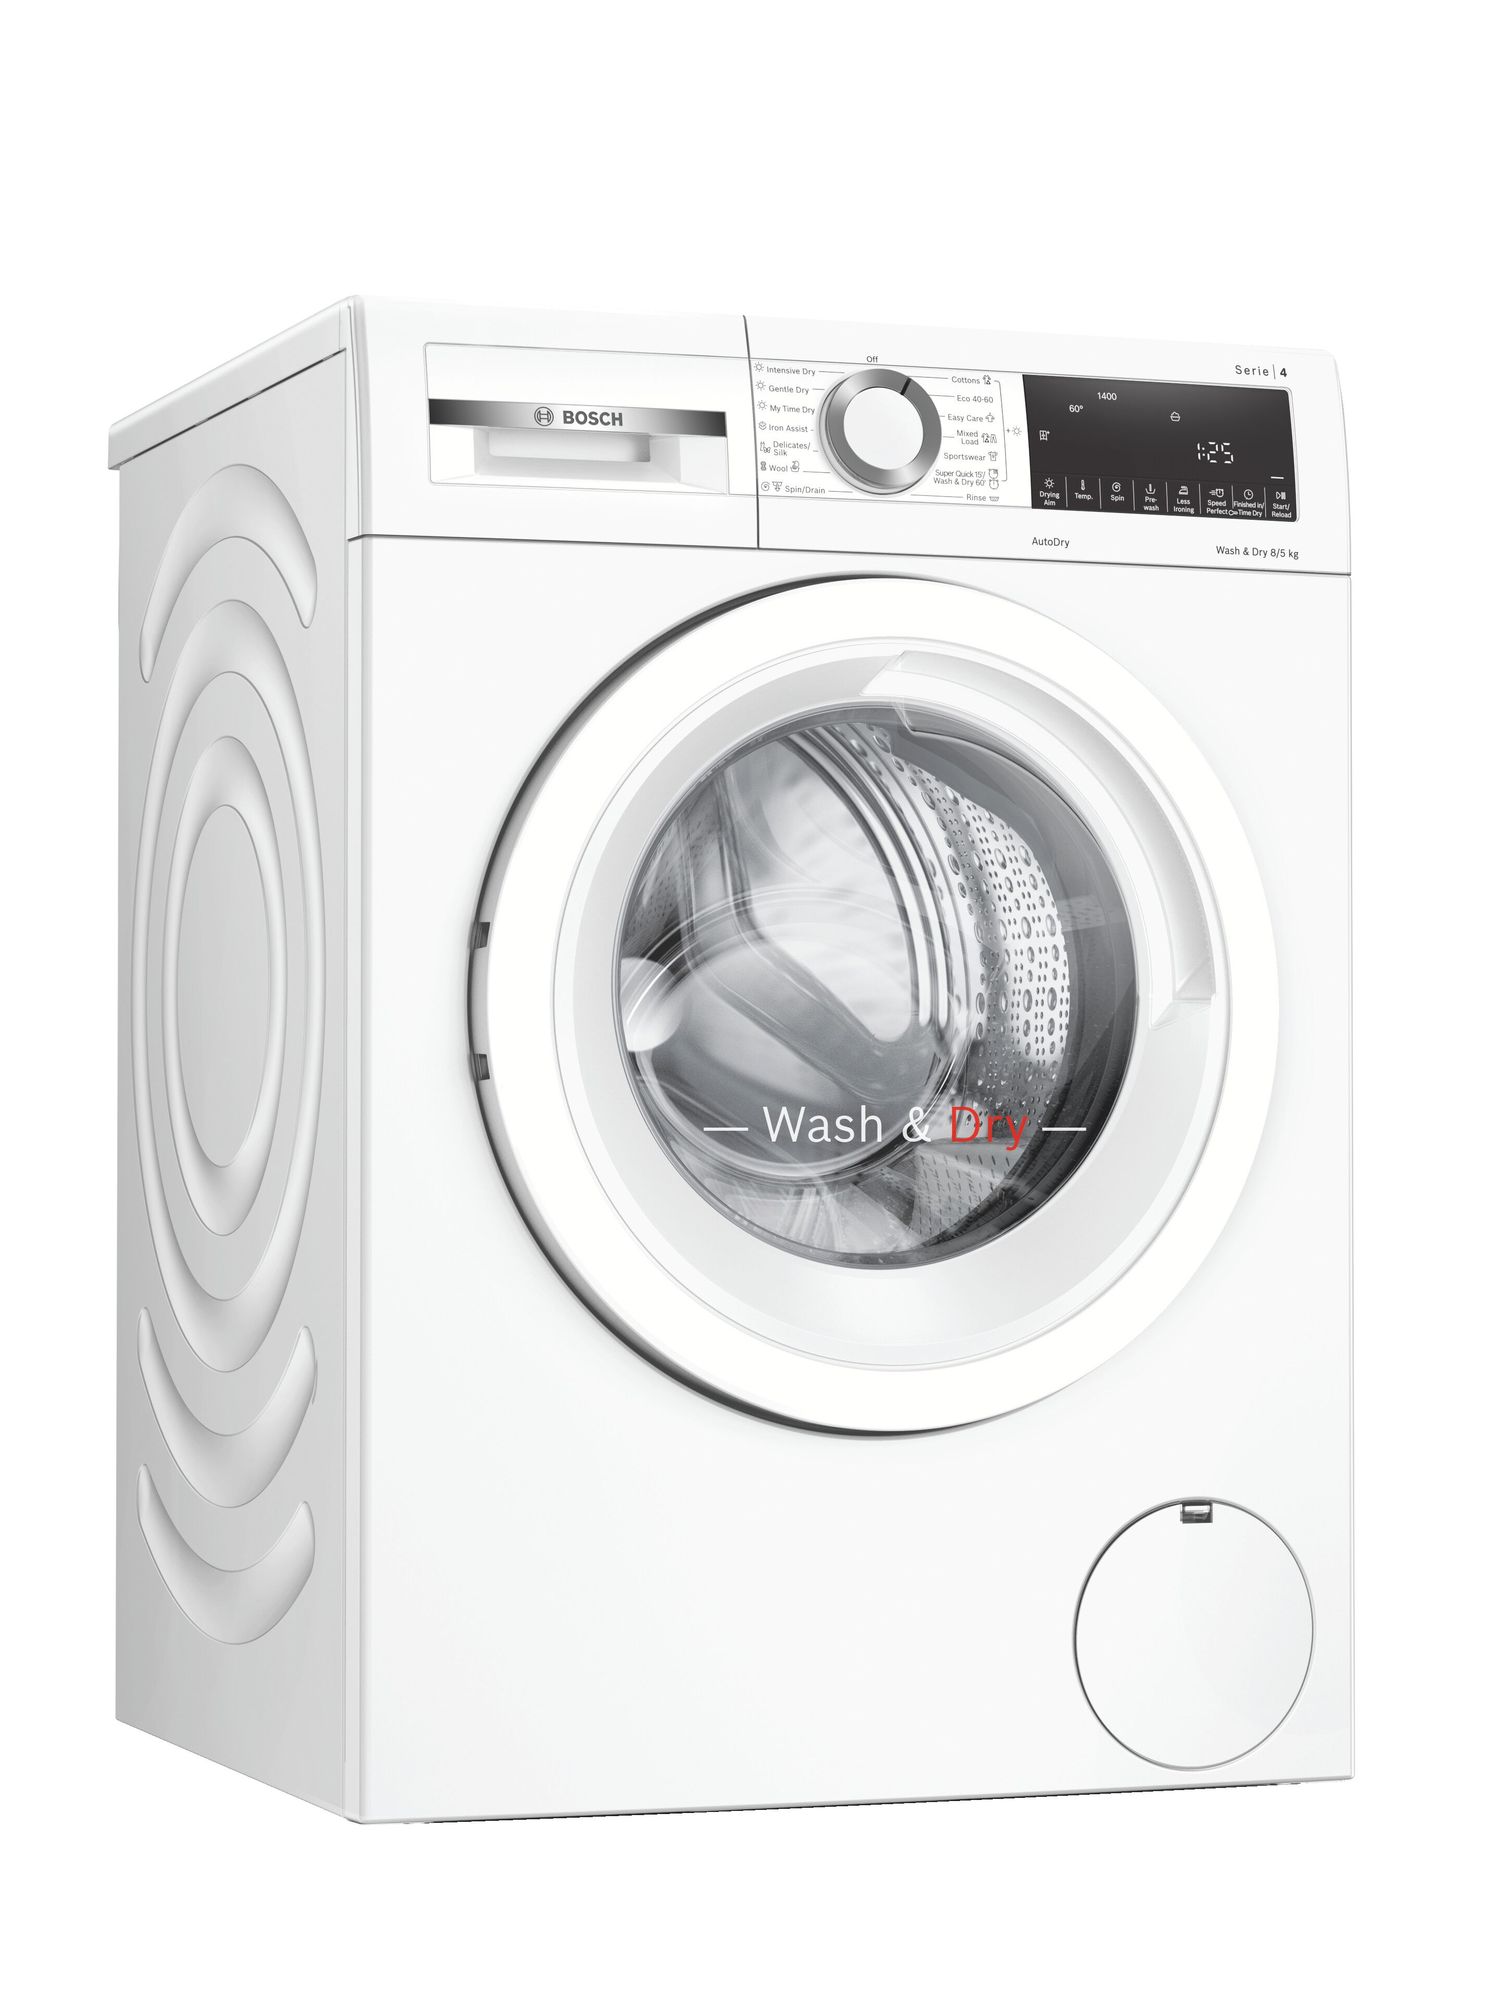 WNA134U8GB BOSCH Washer Dryer - 8kg wash/5kg Dry - 1400 Spin  - LED Display - SpeedPerfect - Ecosilence Drive - C Energy